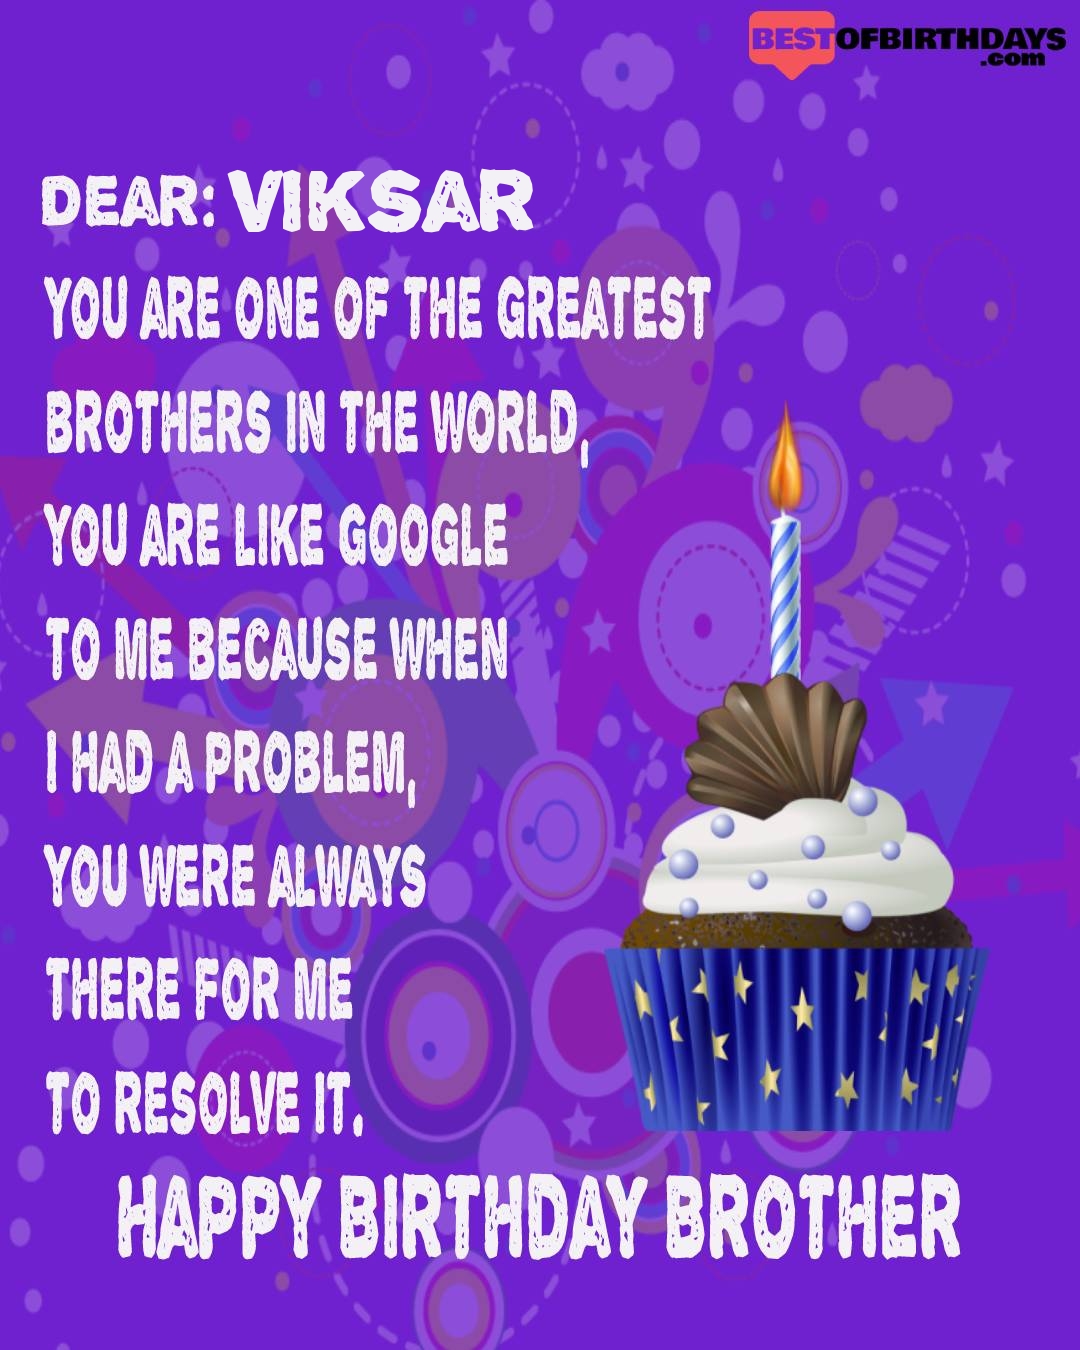 Happy birthday viksar bhai brother bro